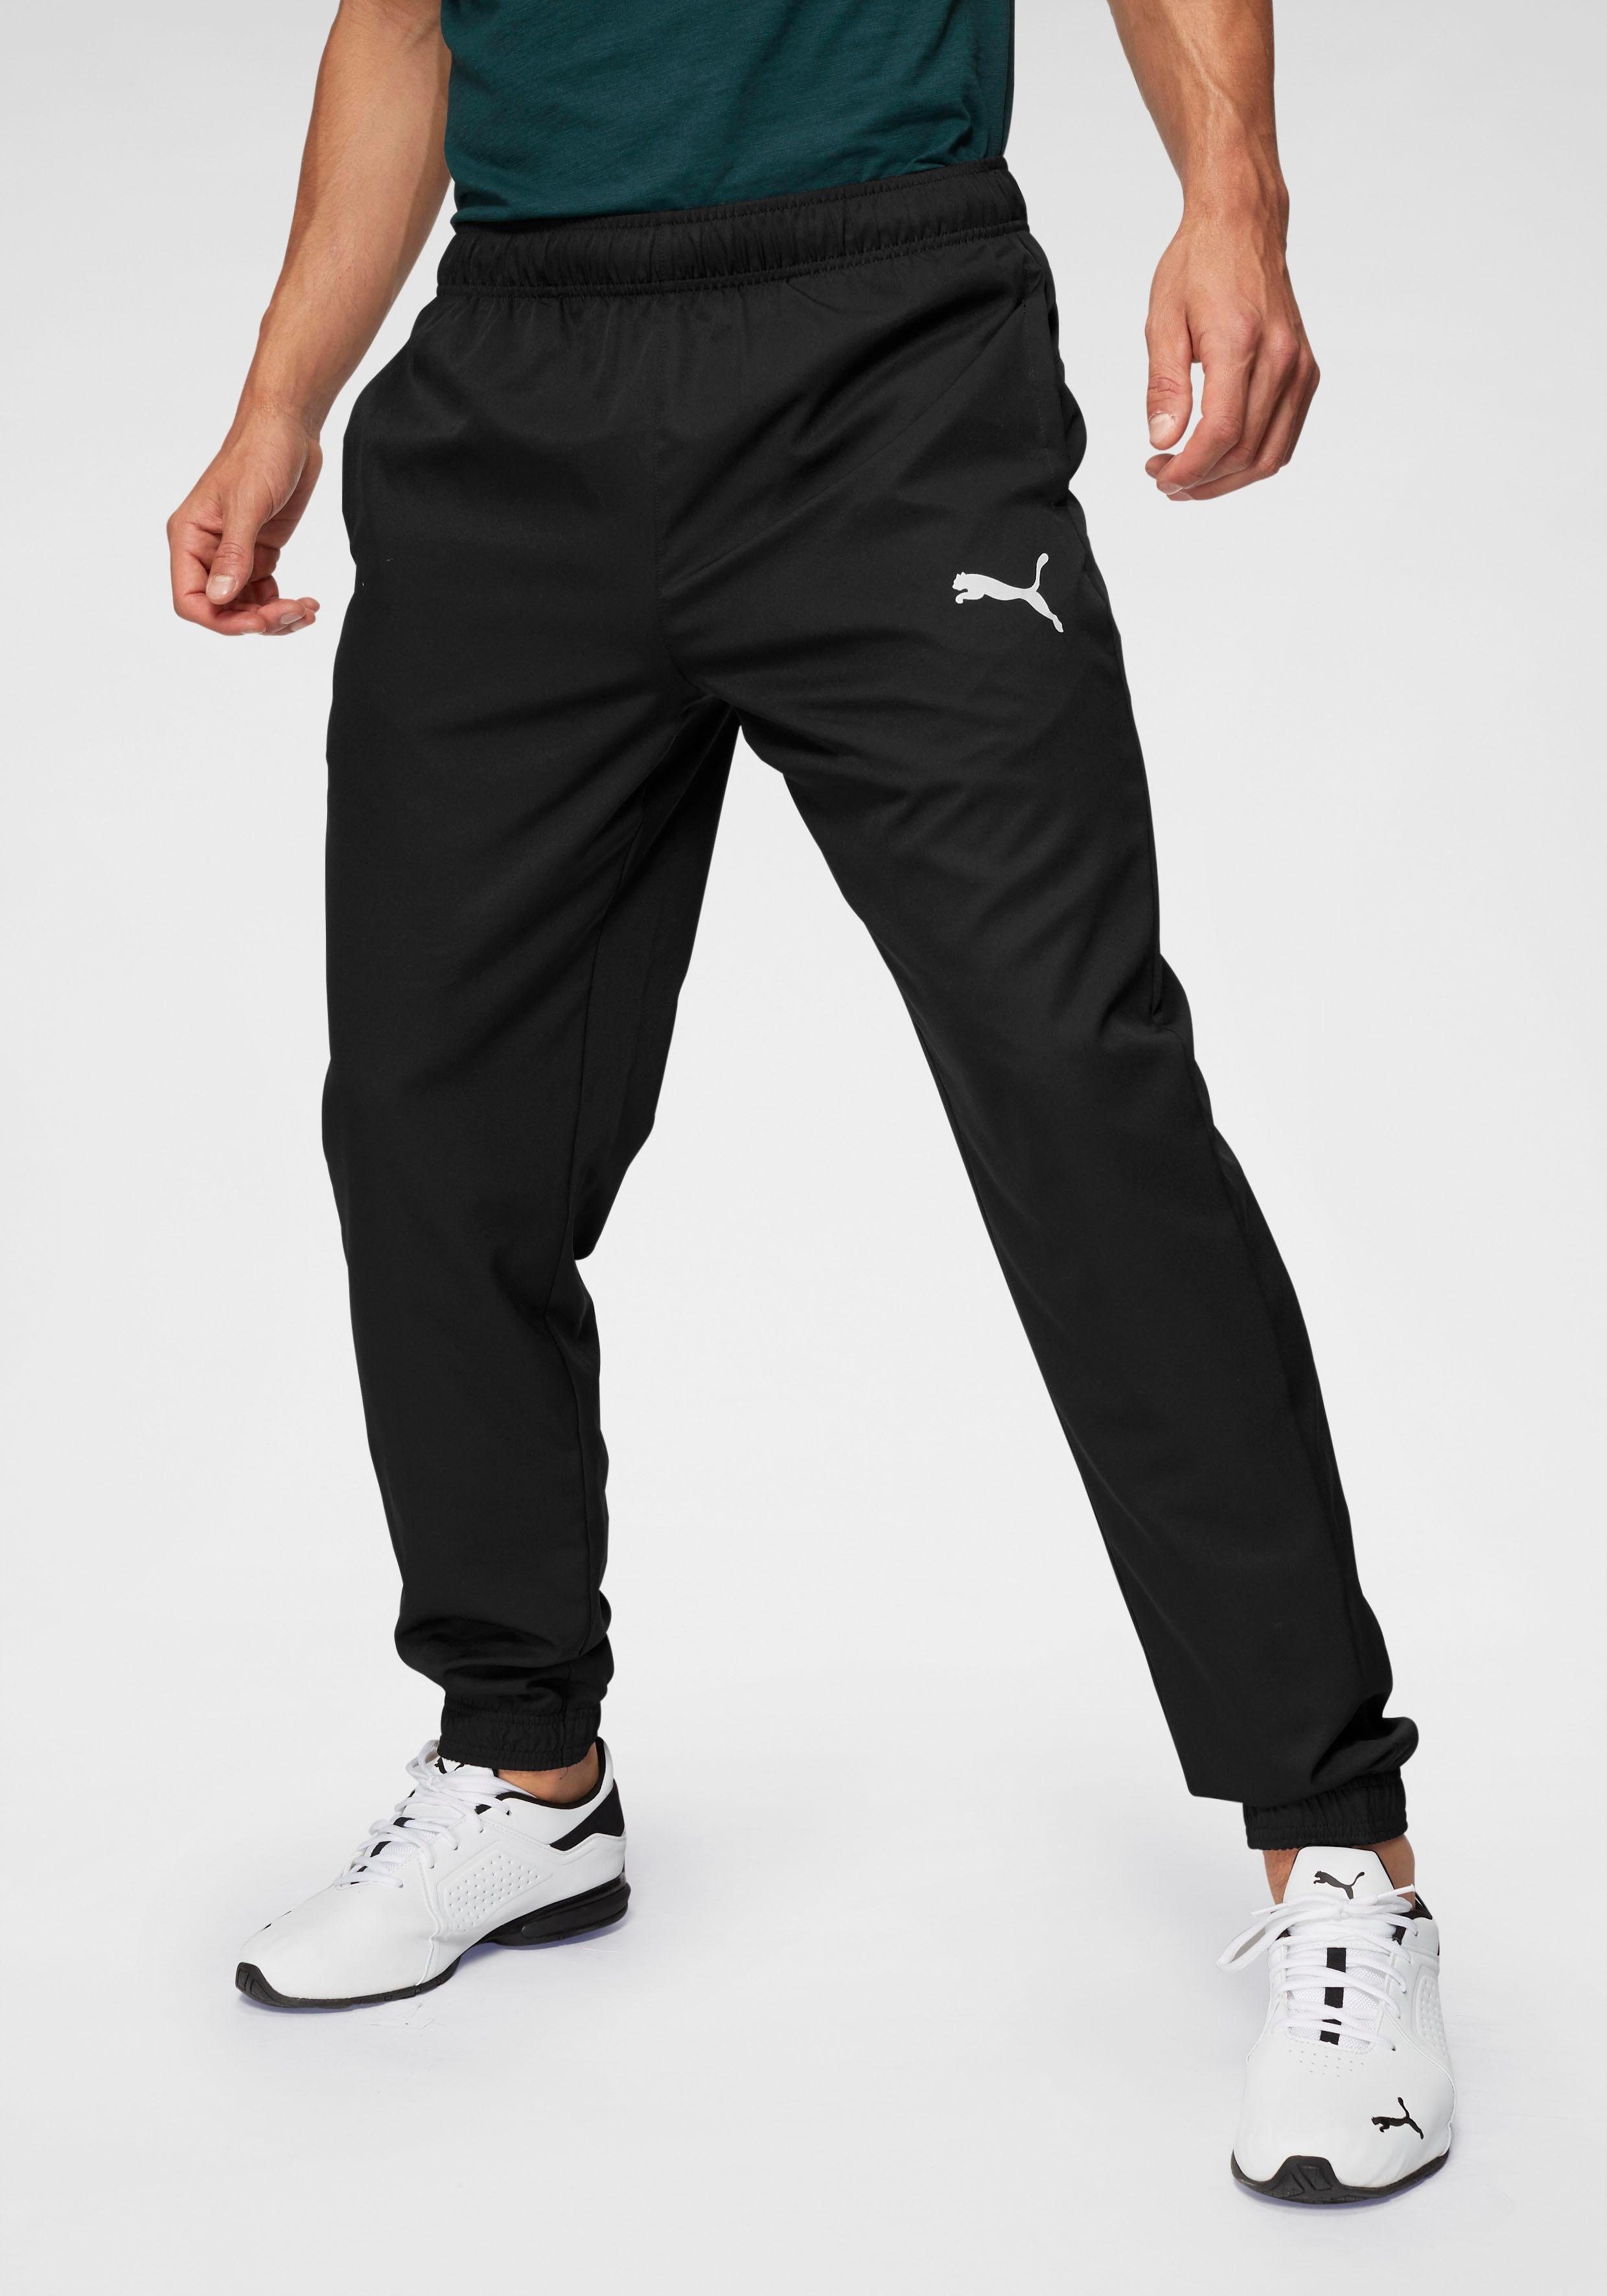 PUMA Sporthose »ACTIVE WOVEN PANTS CL«, Logodruck online kaufen | OTTO